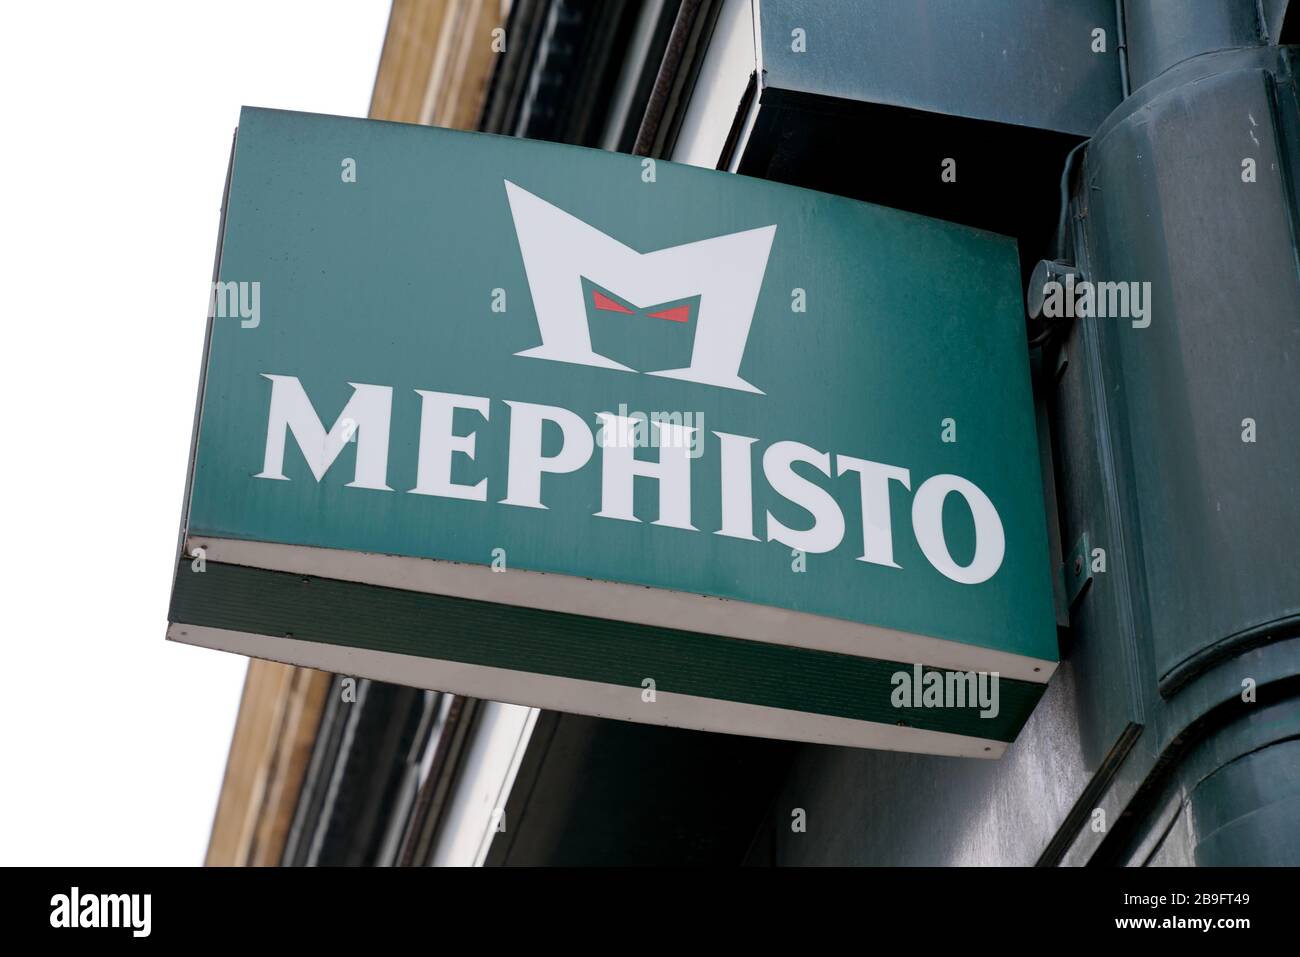 mephisto retailers